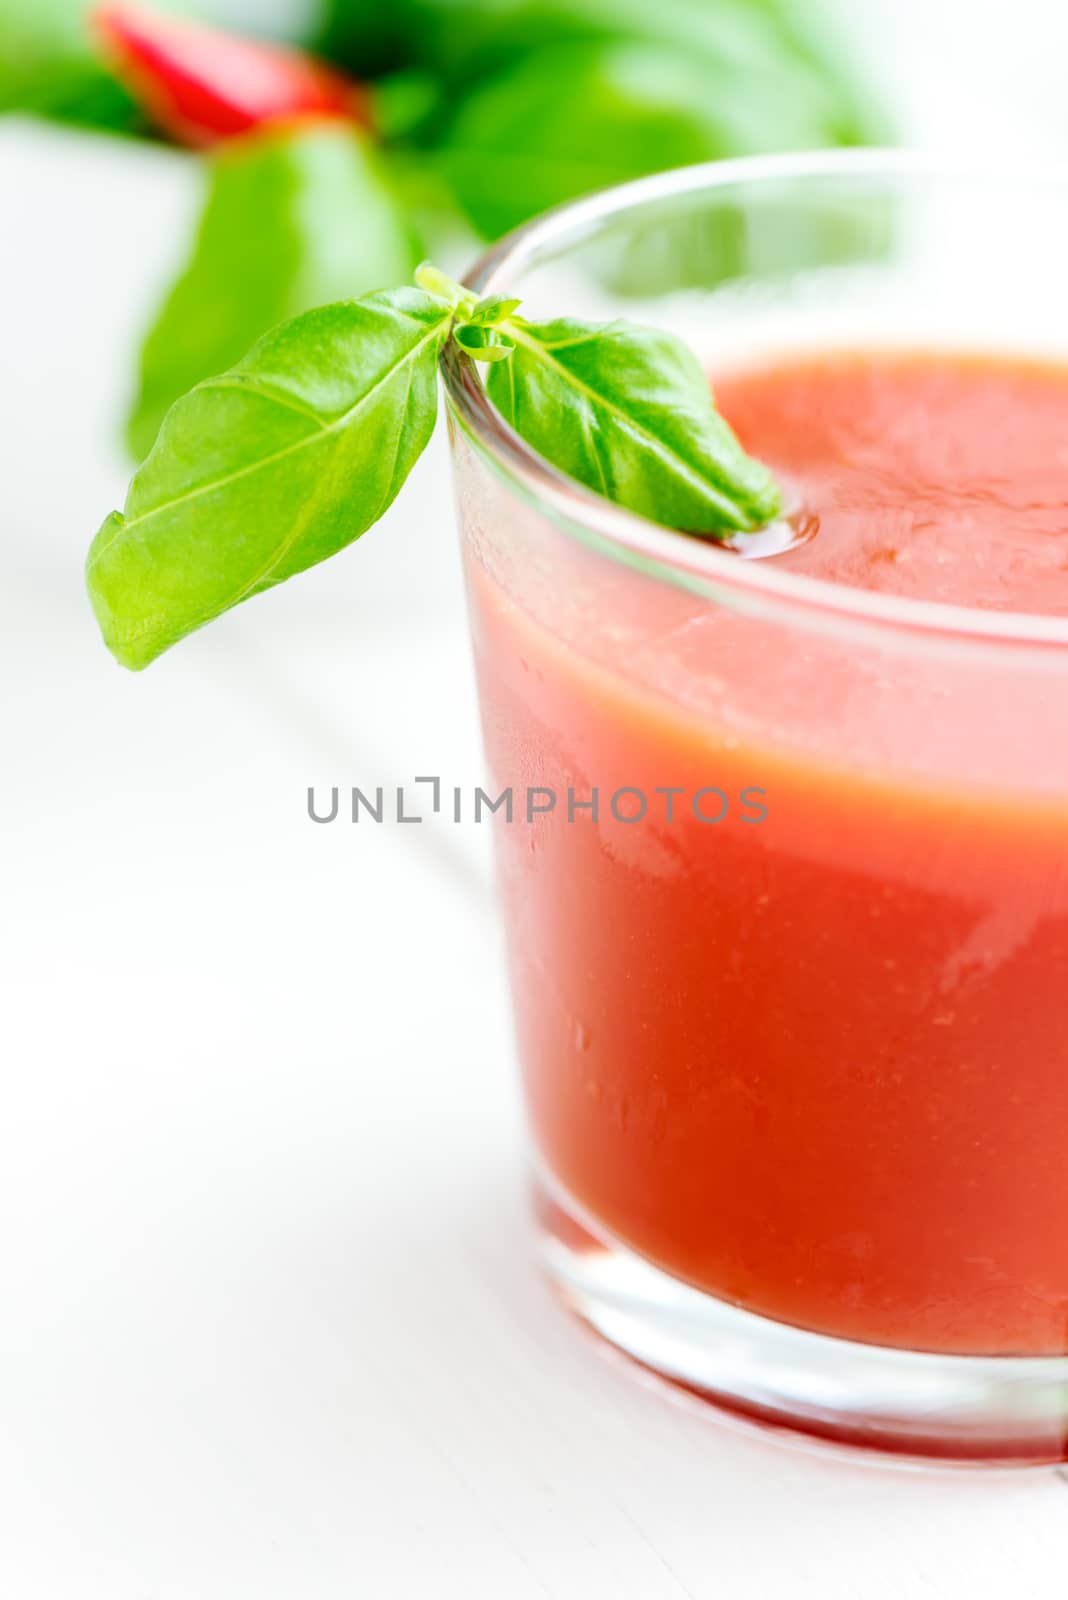 Cold tomato juice in a glass by Nanisimova